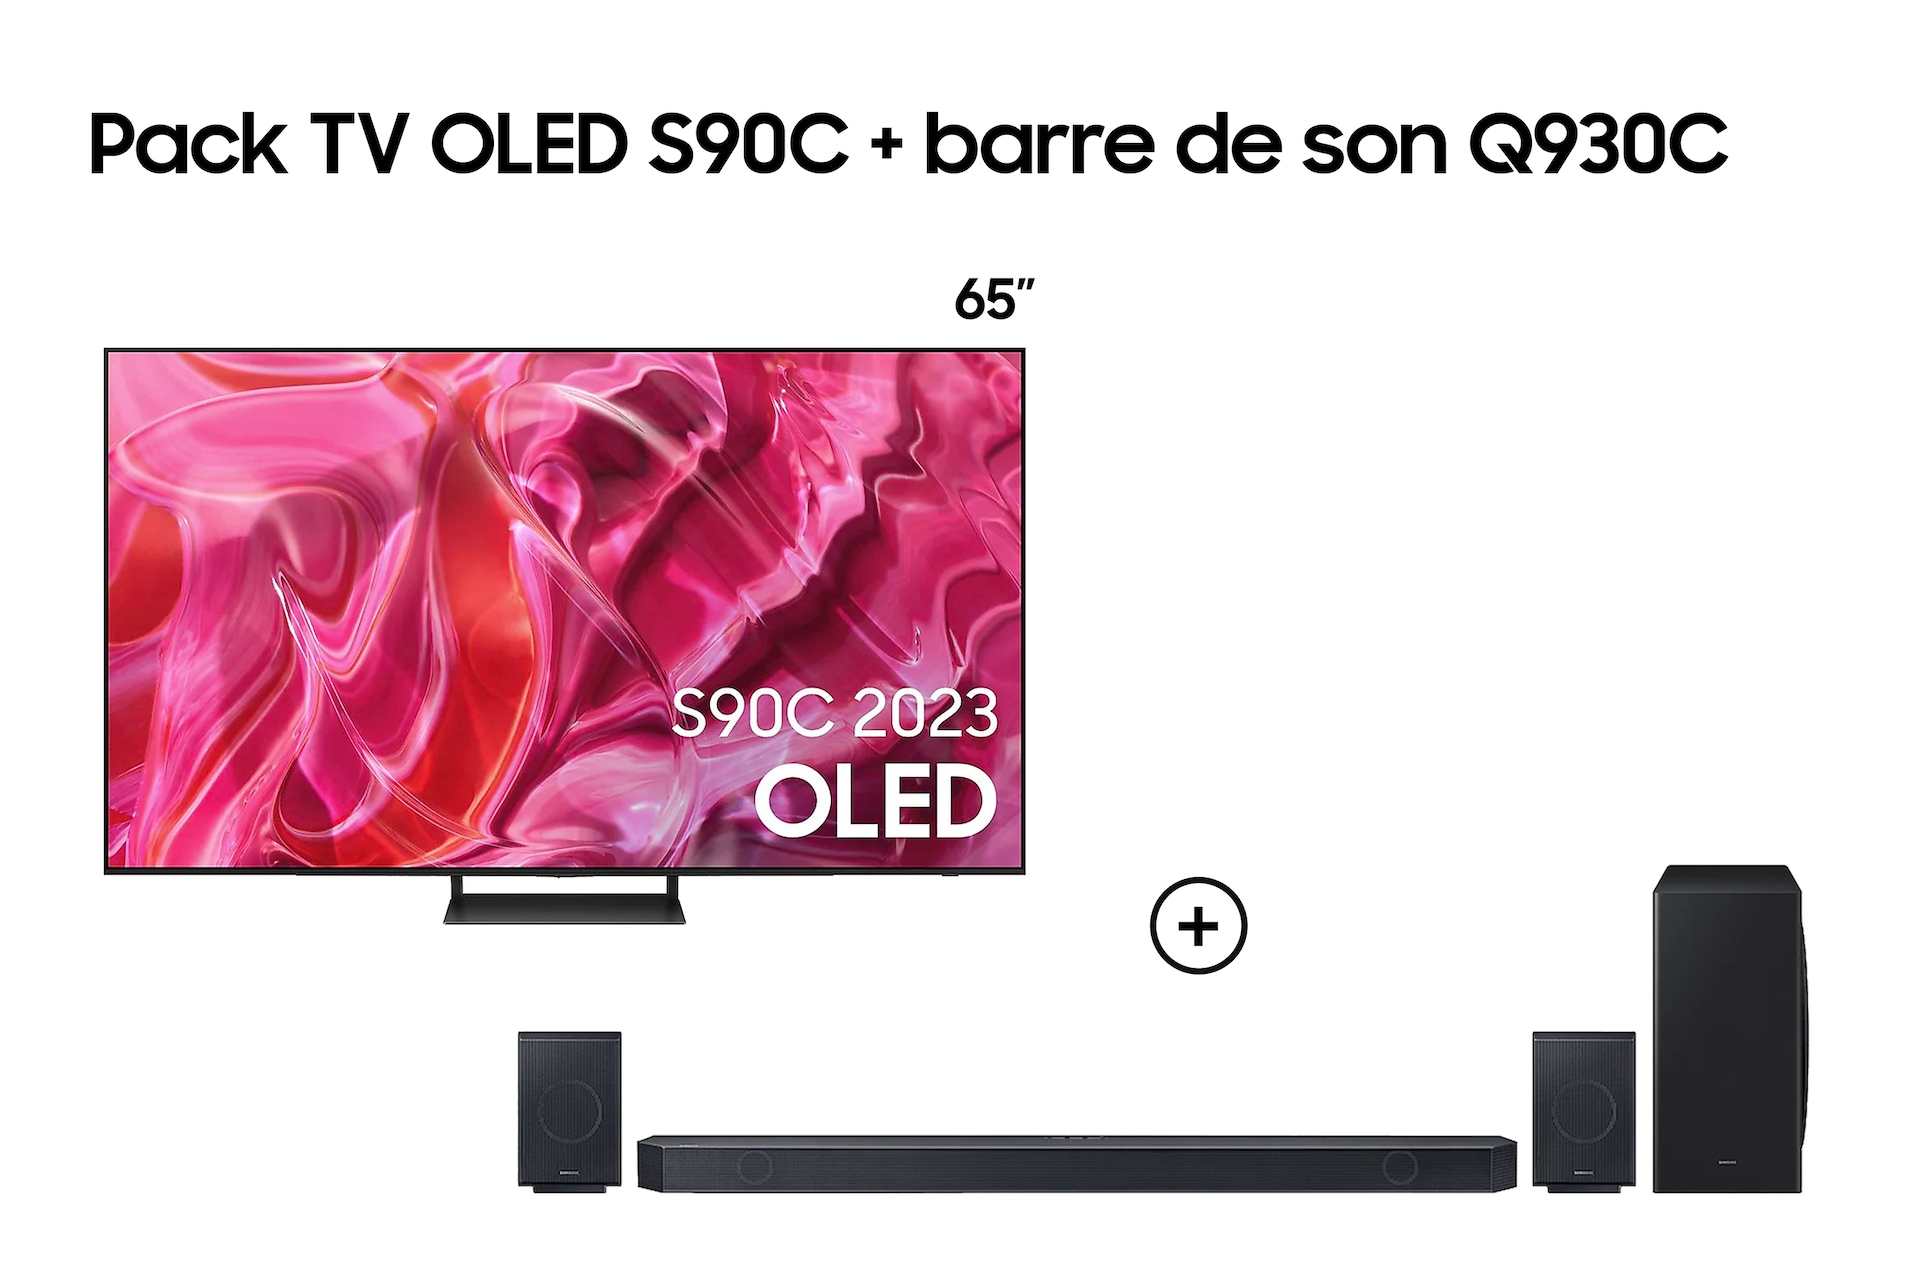 Pack TV OLED 55'' S95C + Barre de son Q930C